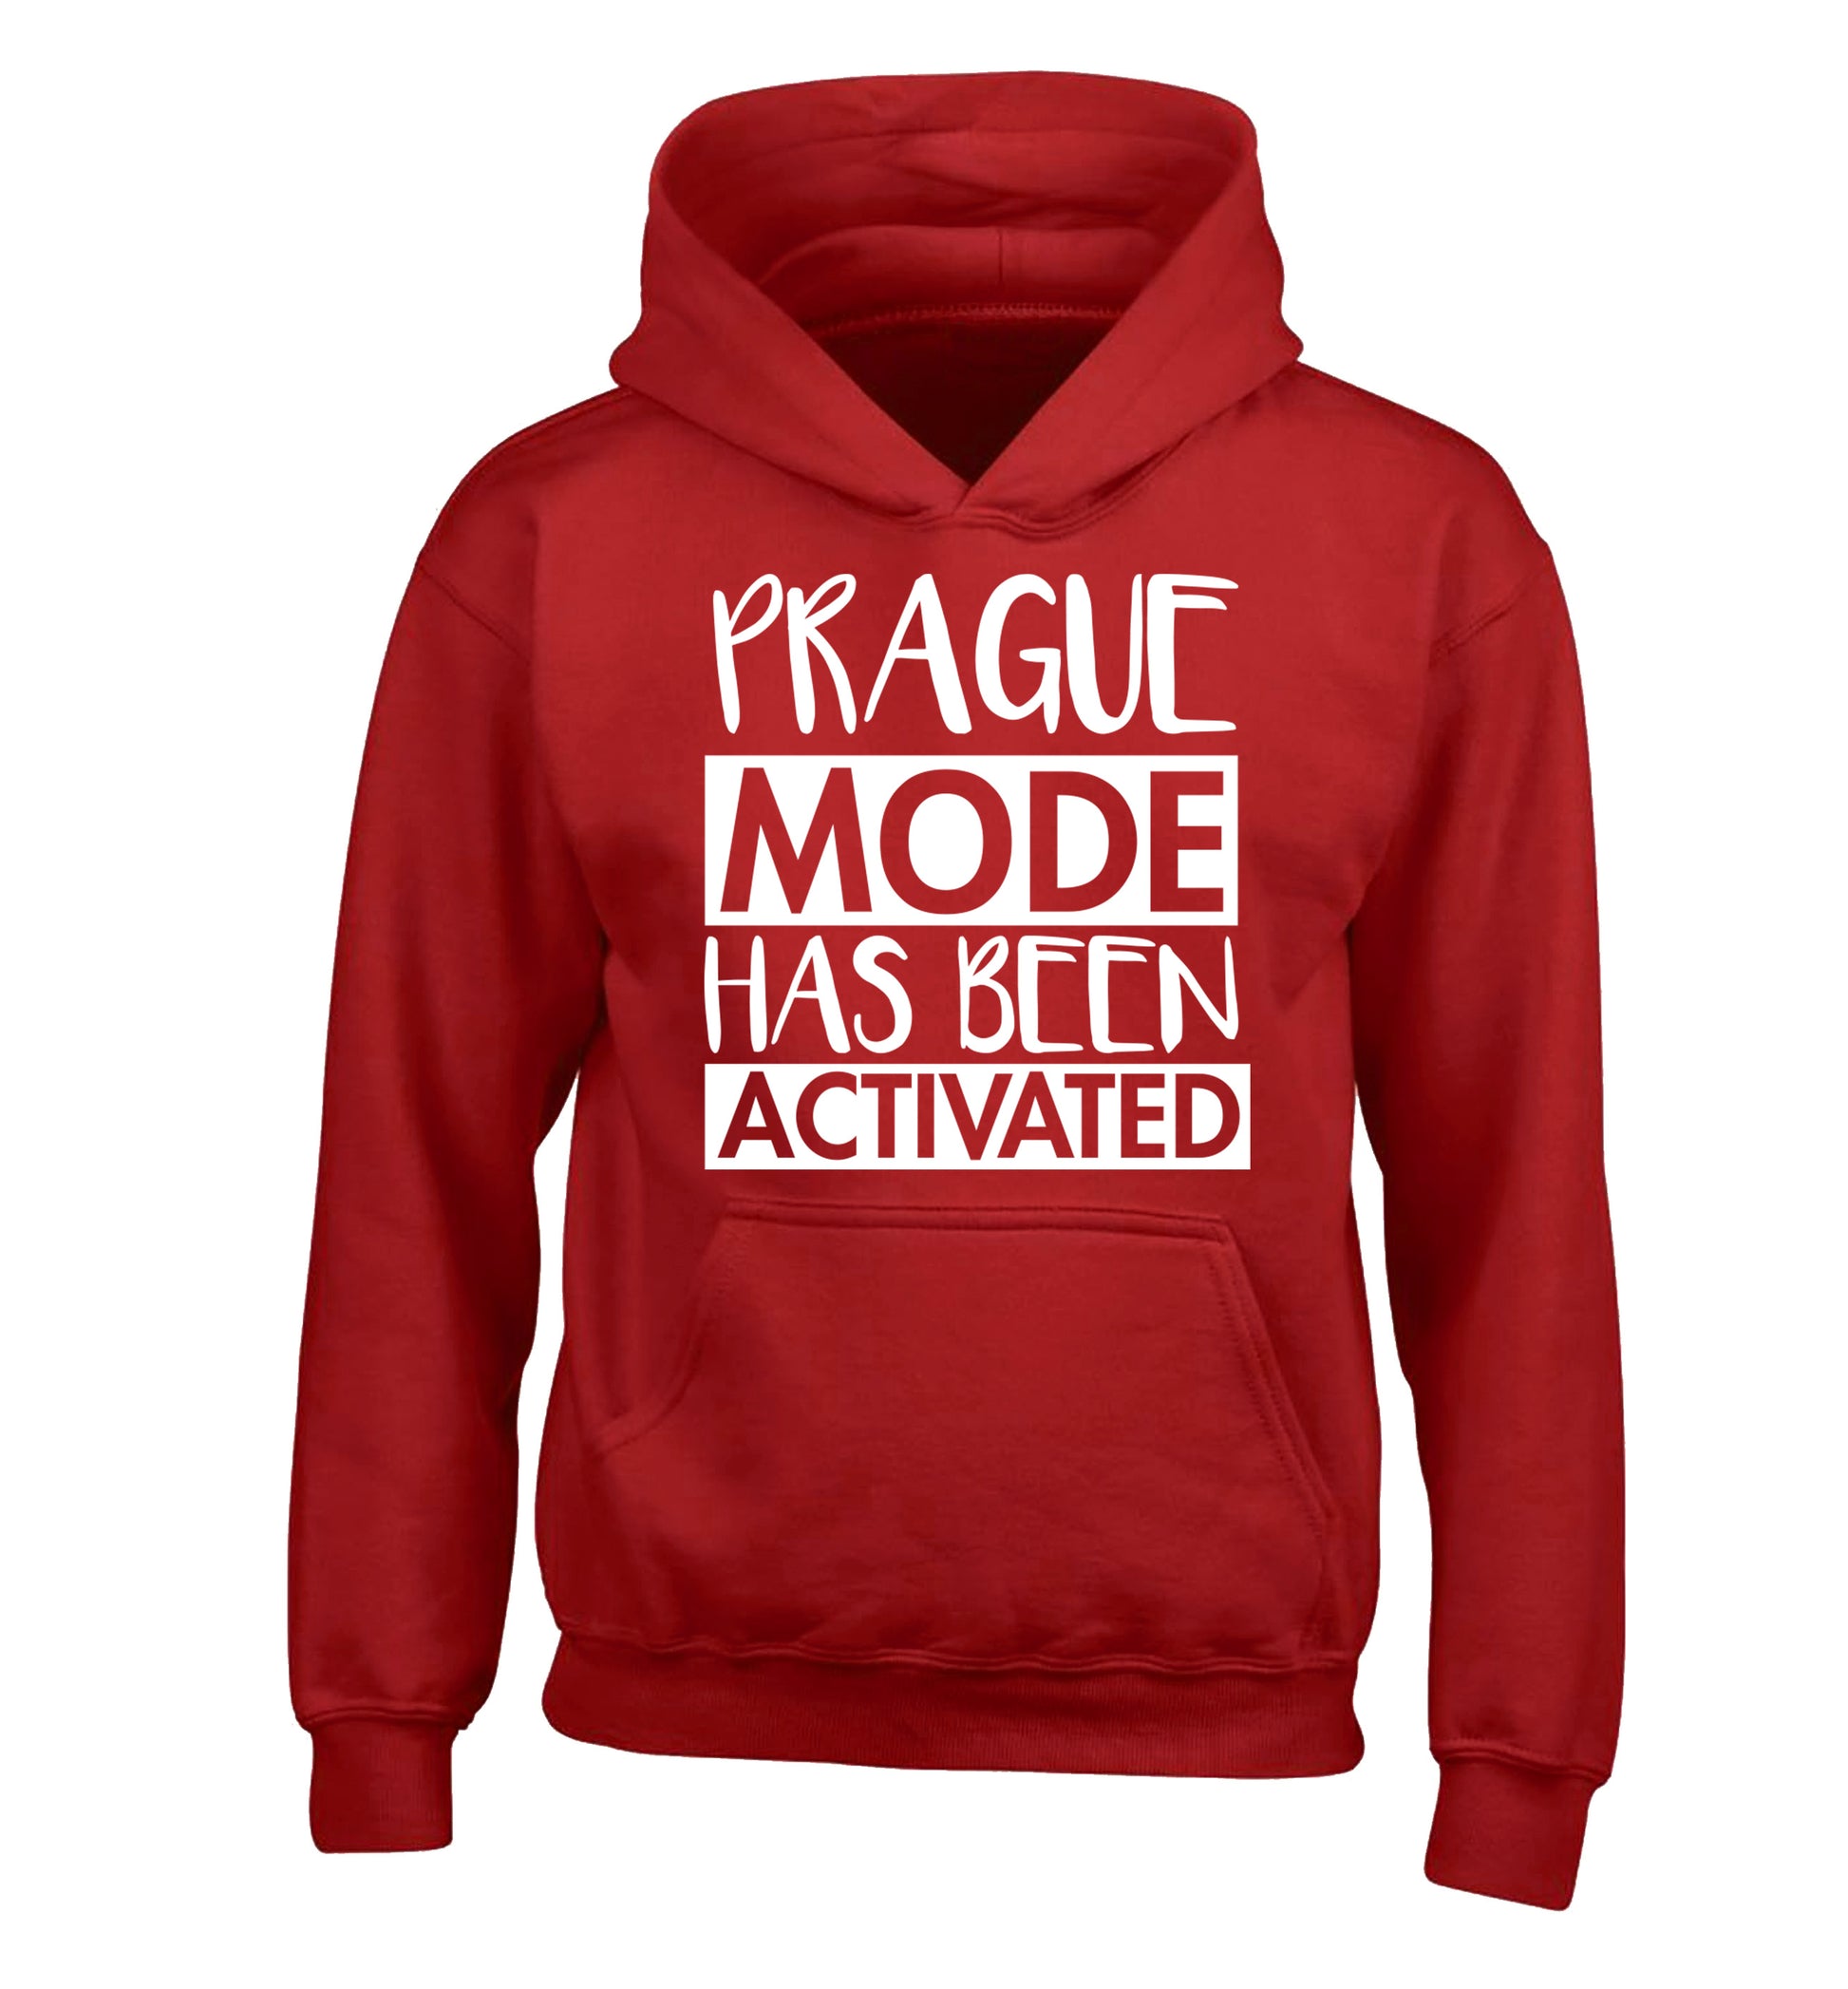 Prague mode has been activated children's red hoodie 12-13 Years